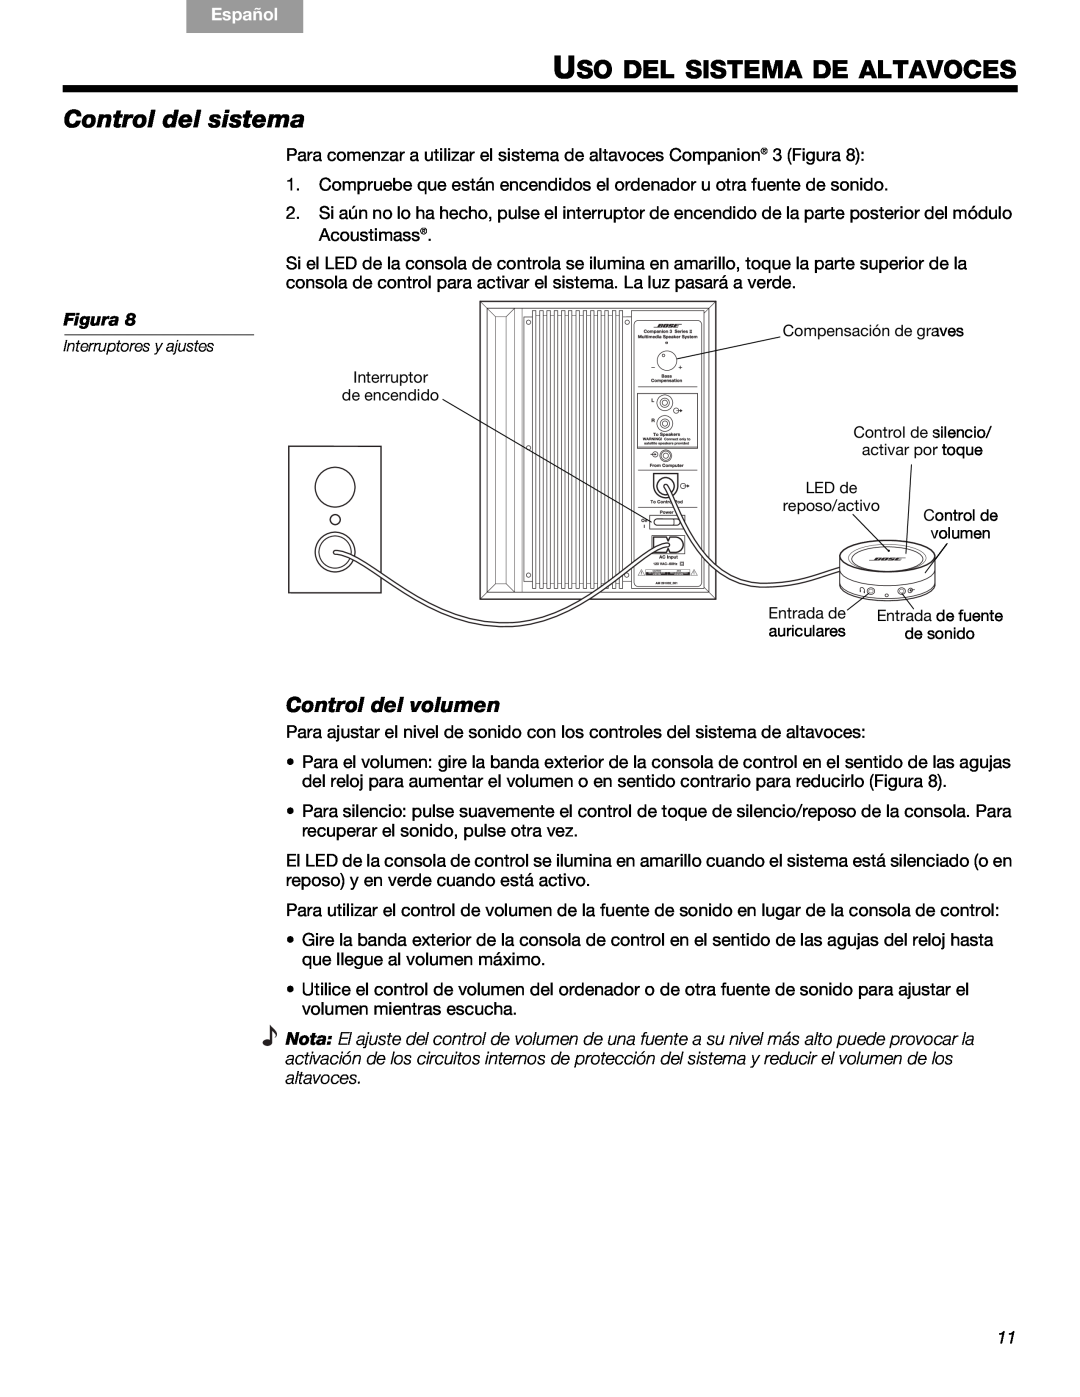 Bose 3 manual Uso Del Sistema De Altavoces, Control del sistema, Control del volumen, English, Español, Français, Figura 